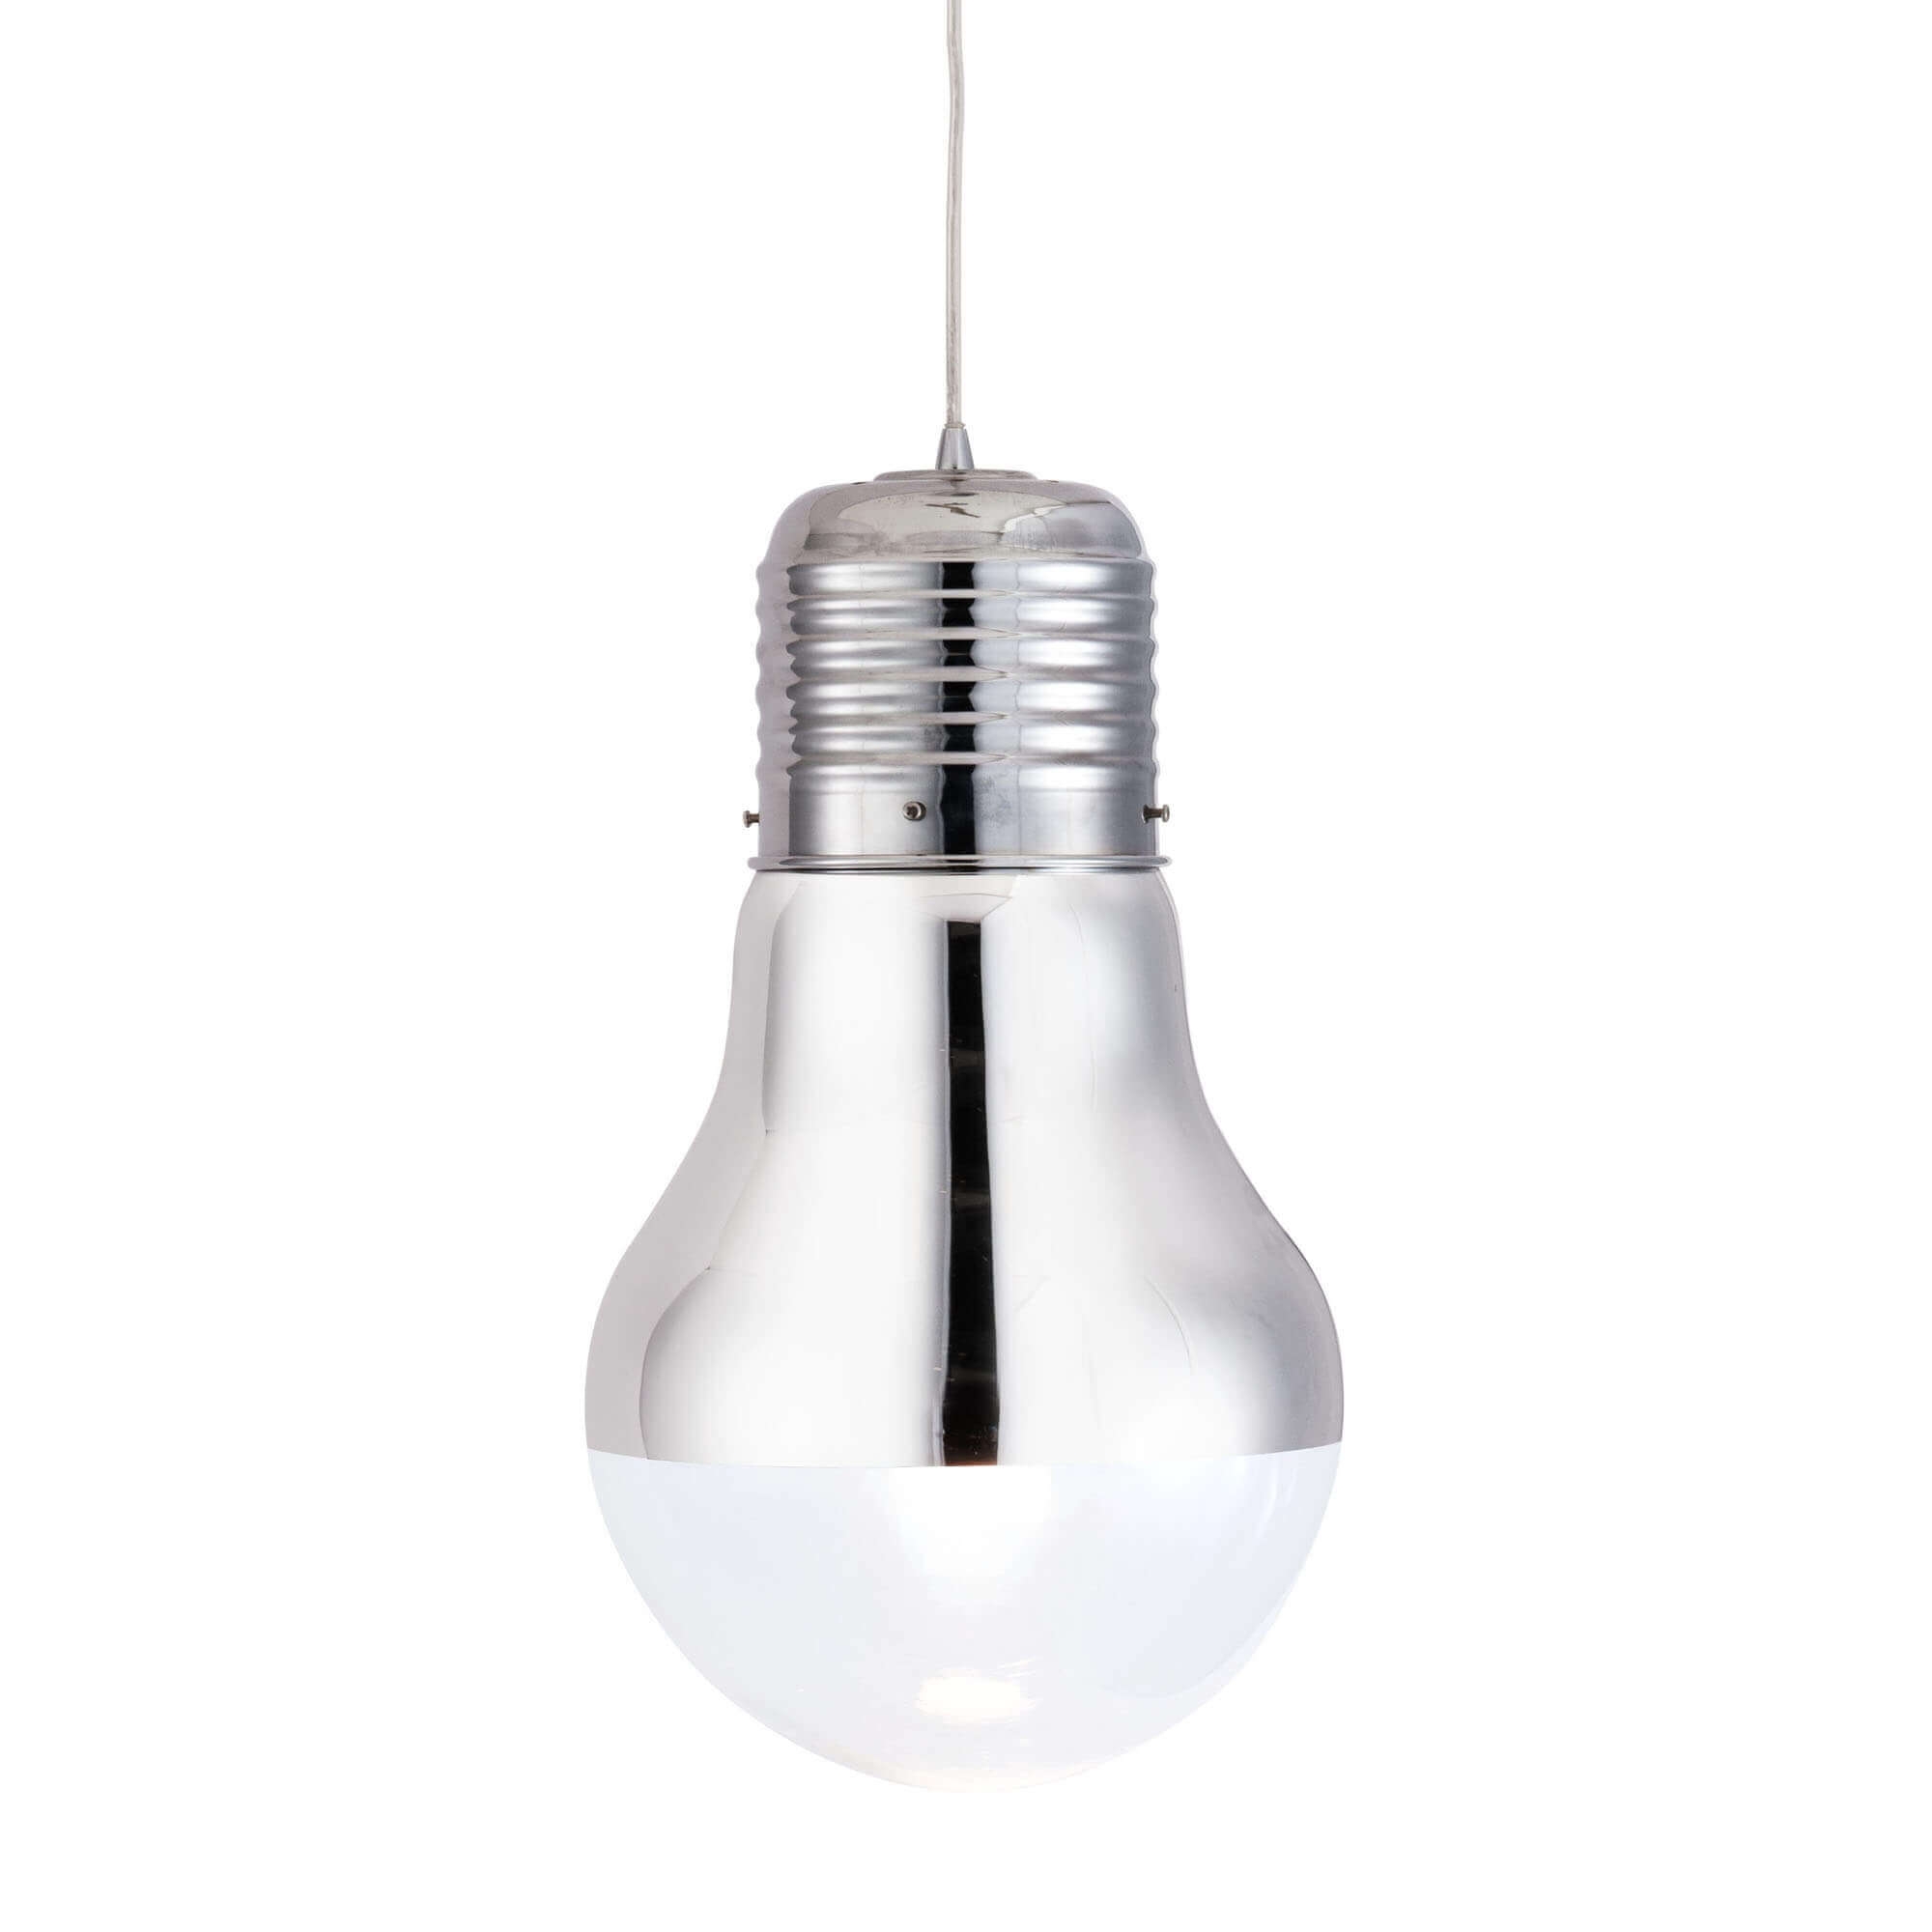 contemporary-lighting-edison-bulb-light-fixture.jpg